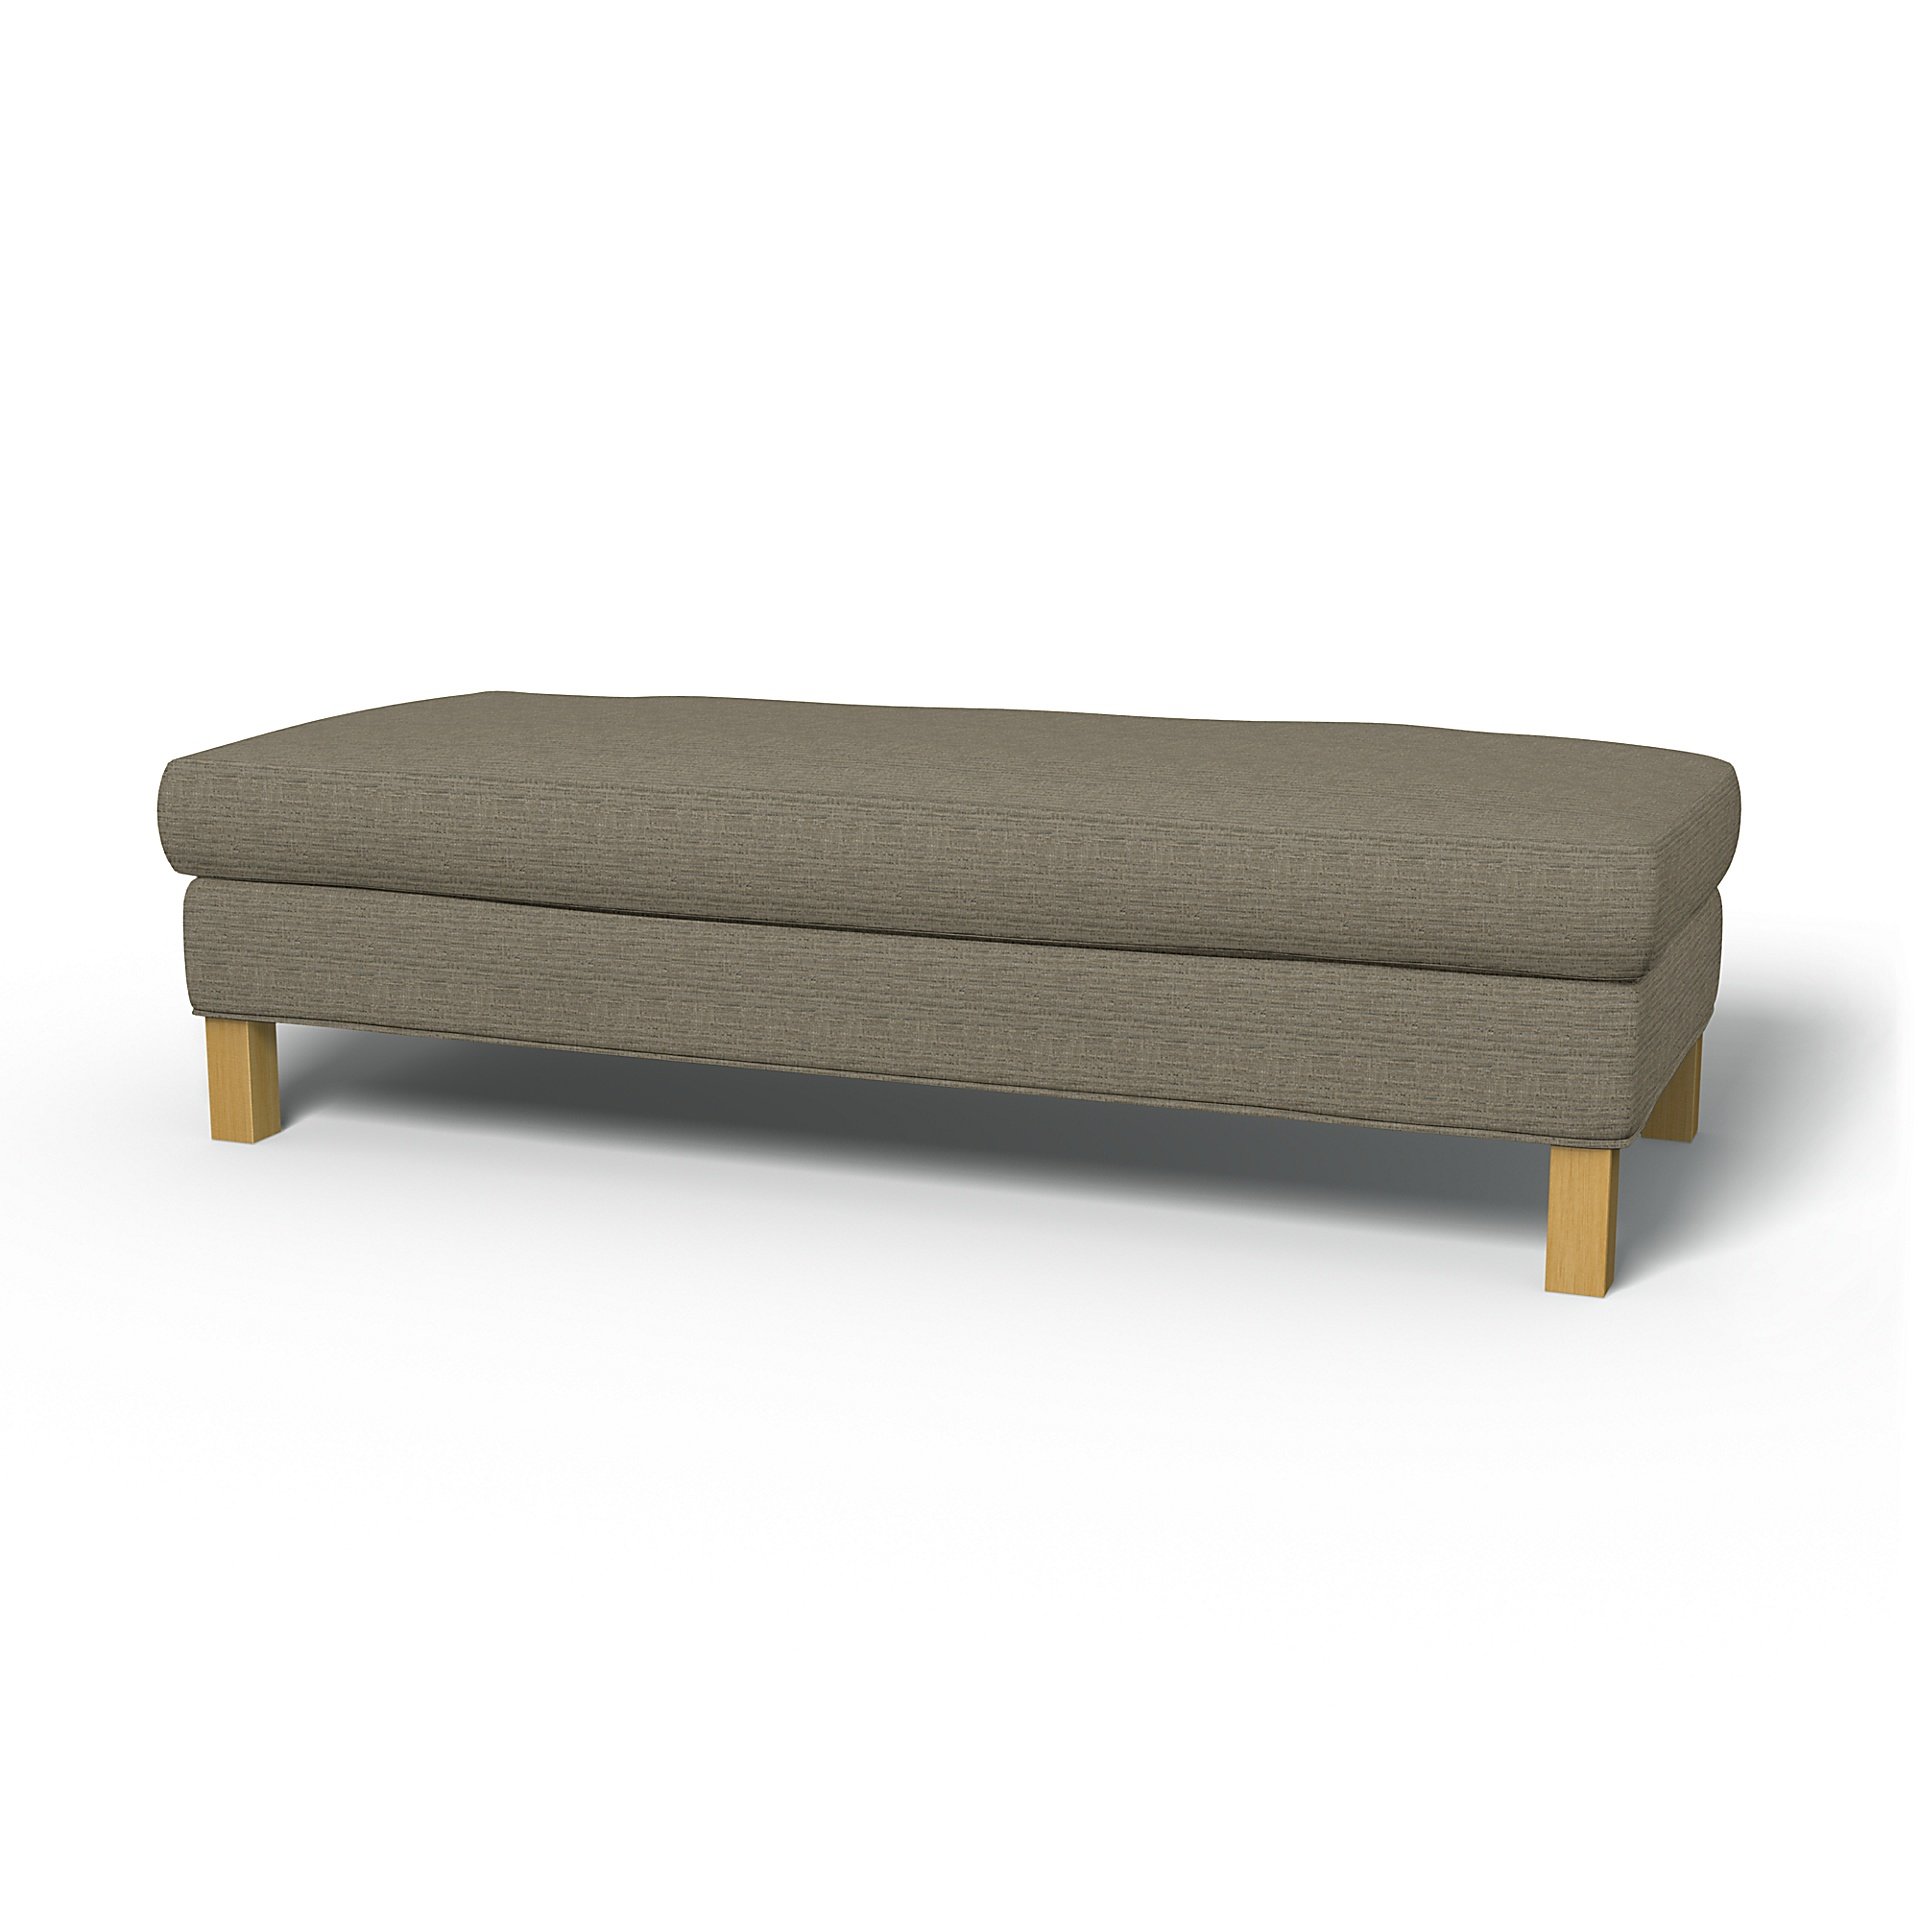 IKEA - Karlanda Bench Cover, Mole Brown, Boucle & Texture - Bemz